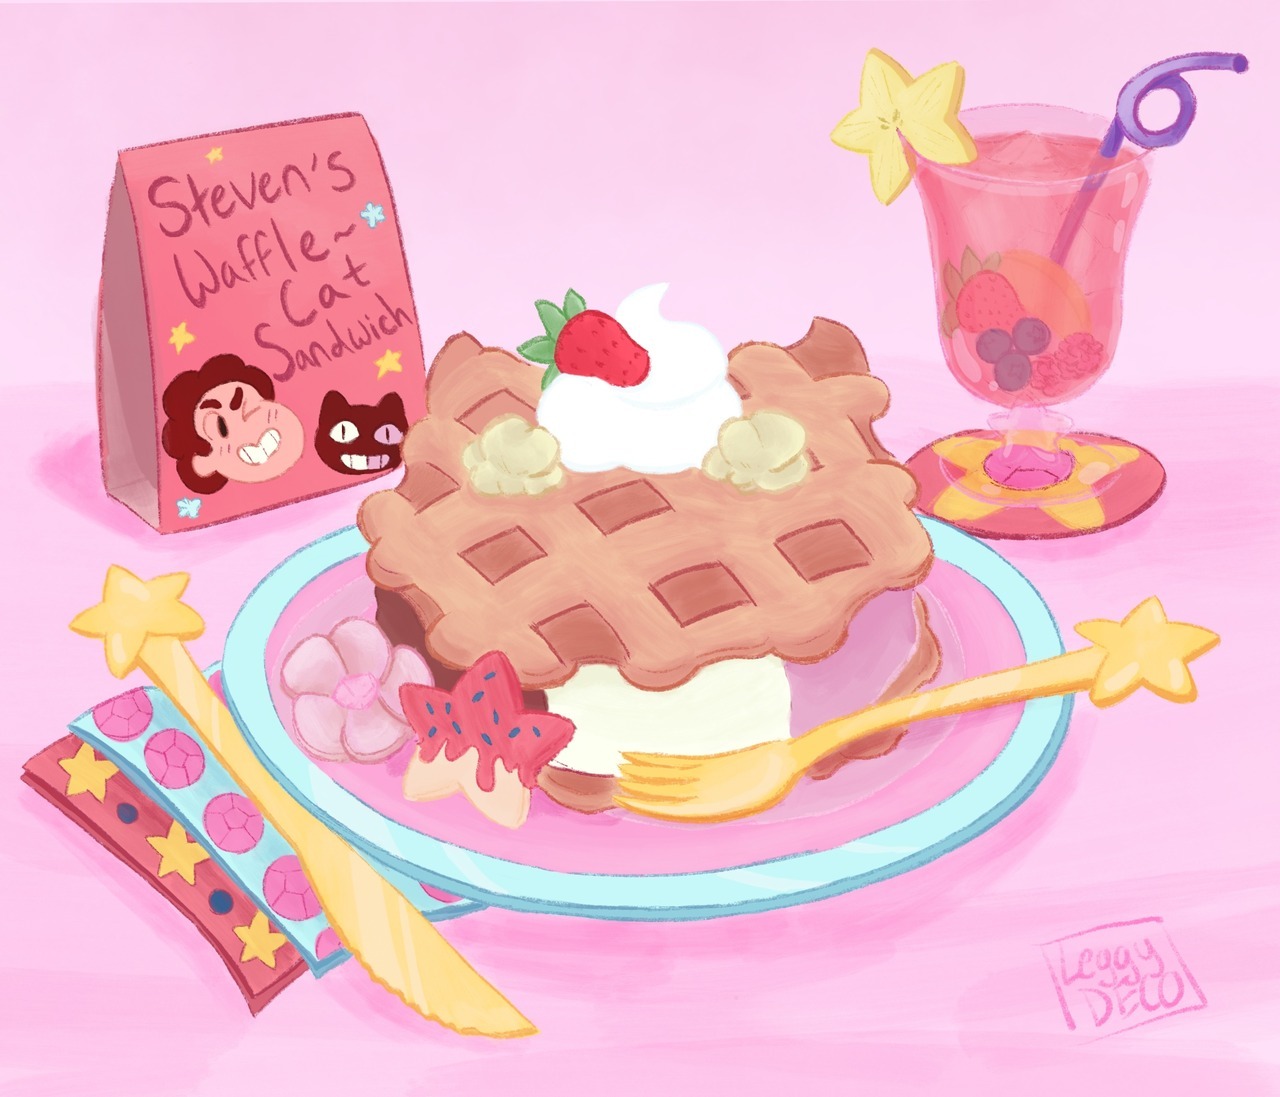 Steven’s Waffle Cat Sandwich with Beach City Punch! (ﾉ◕ヮ◕)ﾉ*:･ﾟ✧ #leggyart